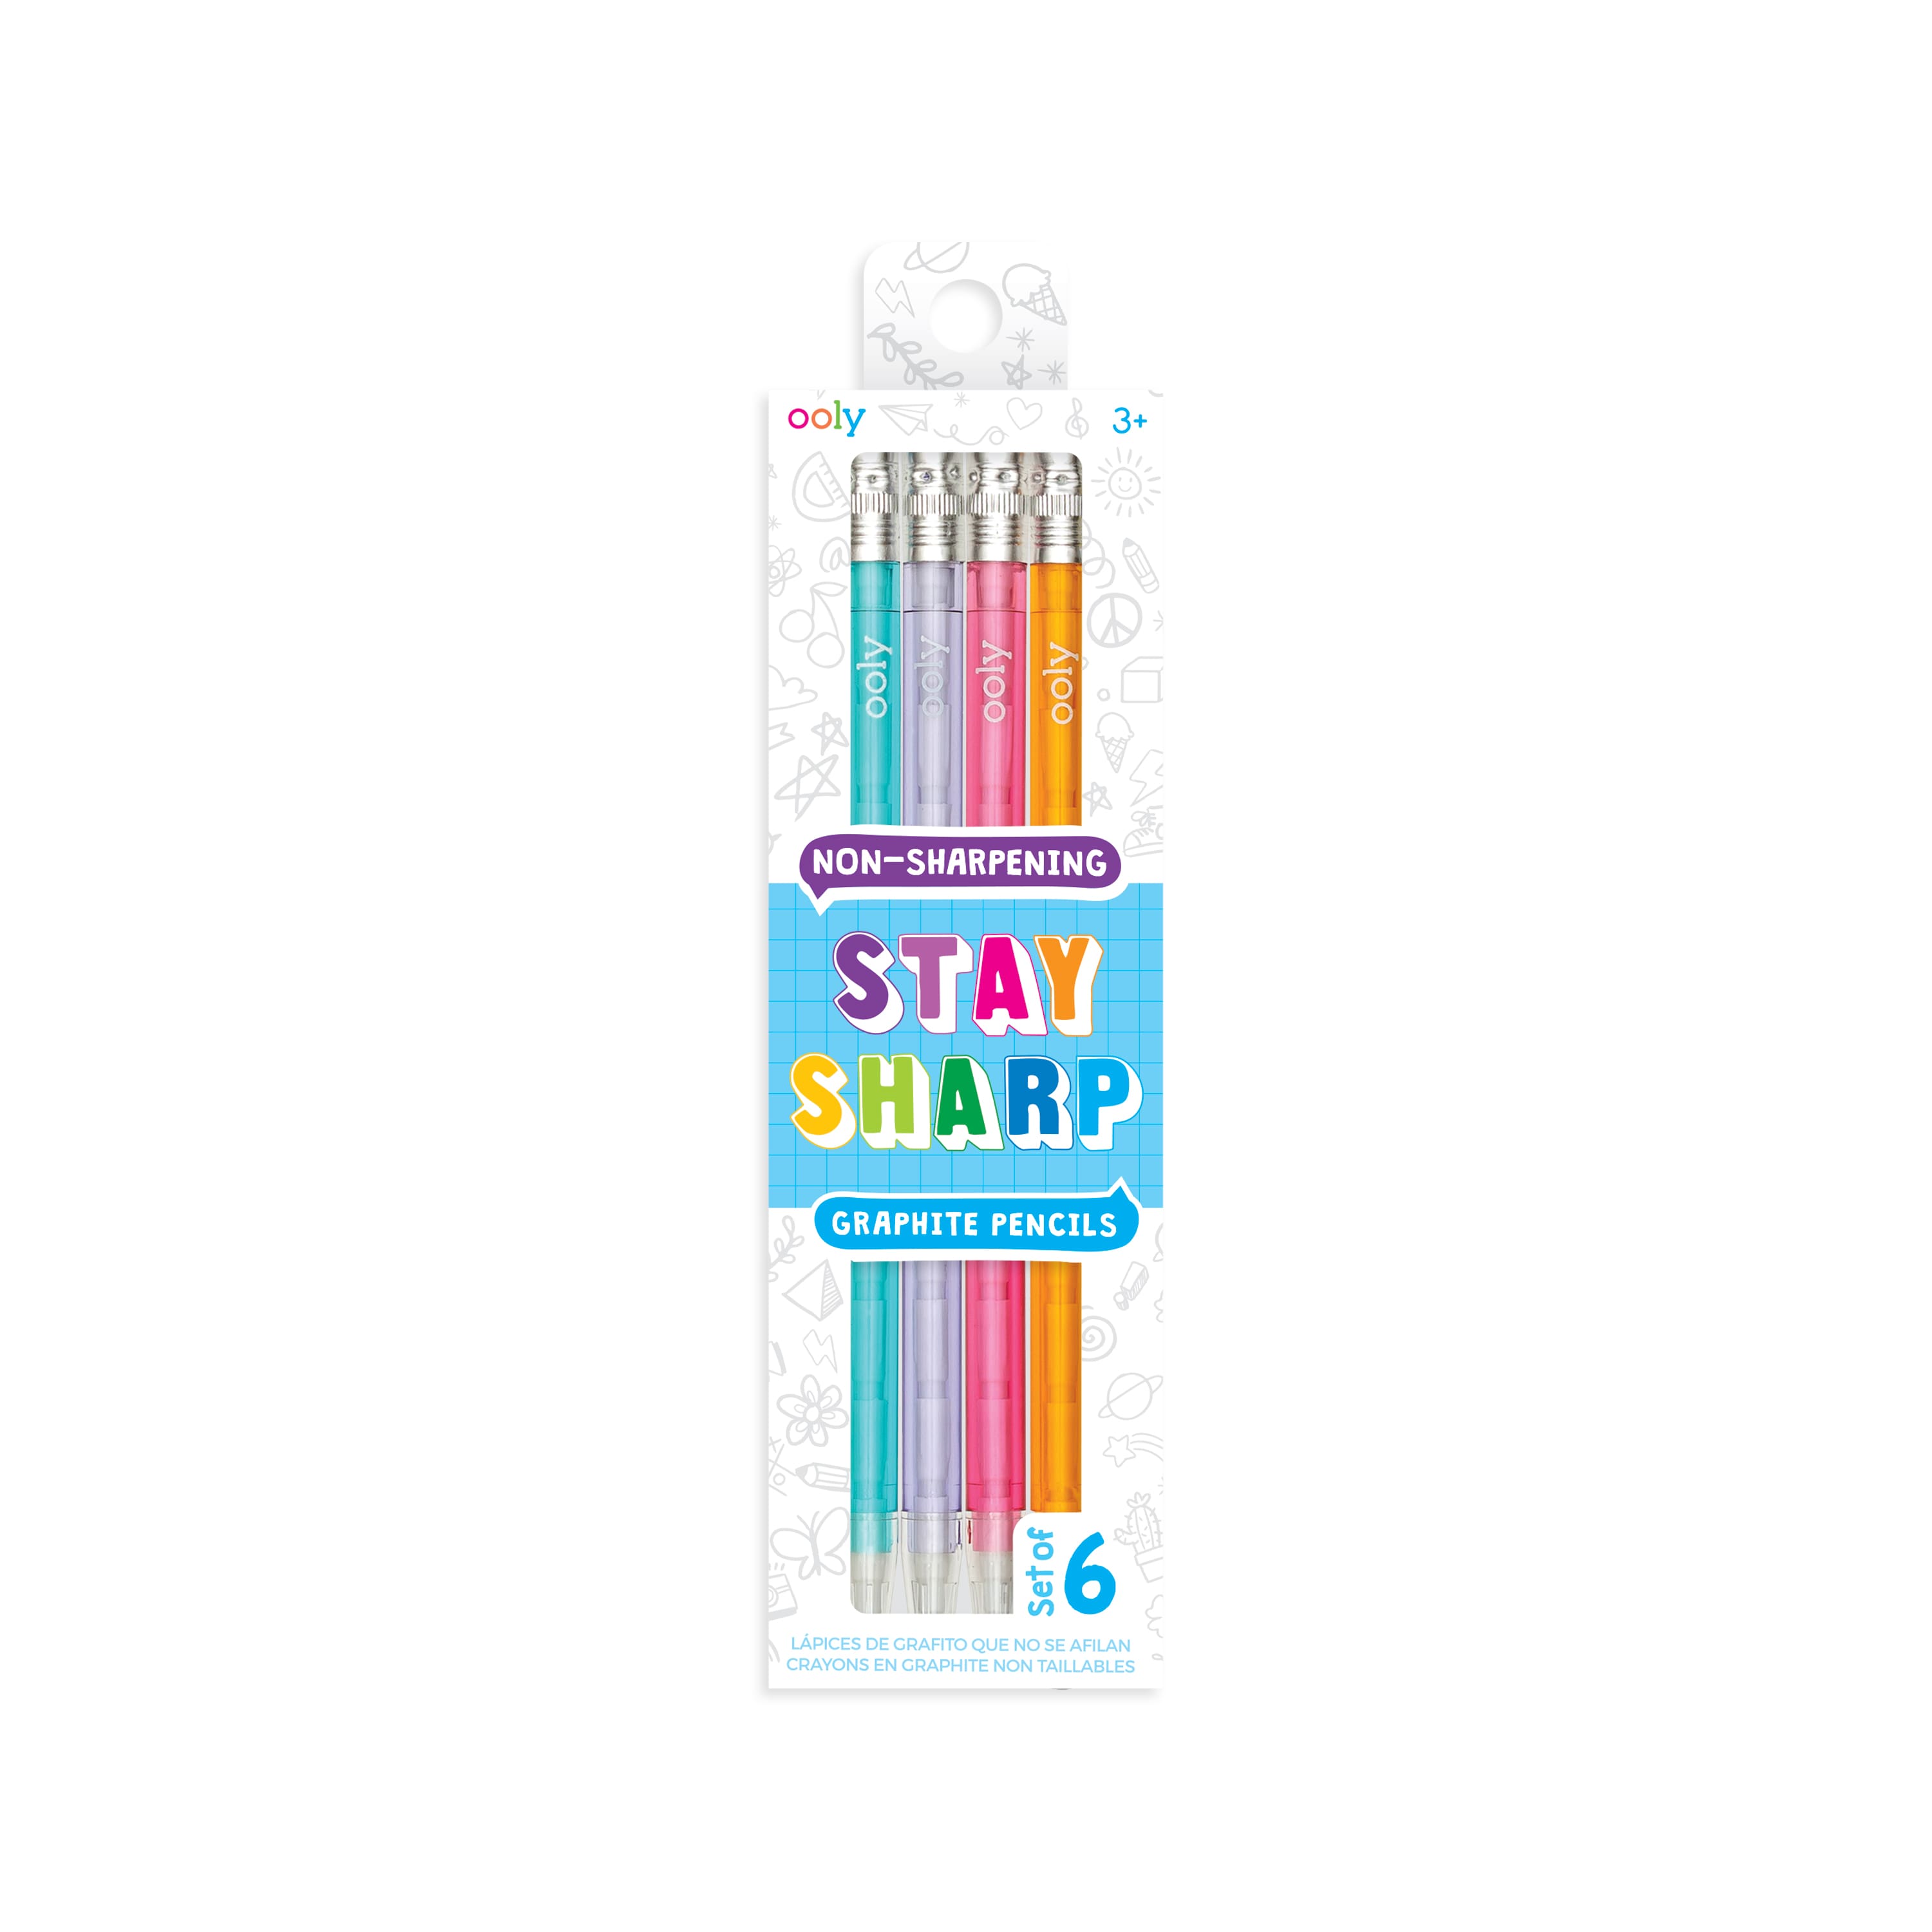 Rainbow Writers - 1 Pencil